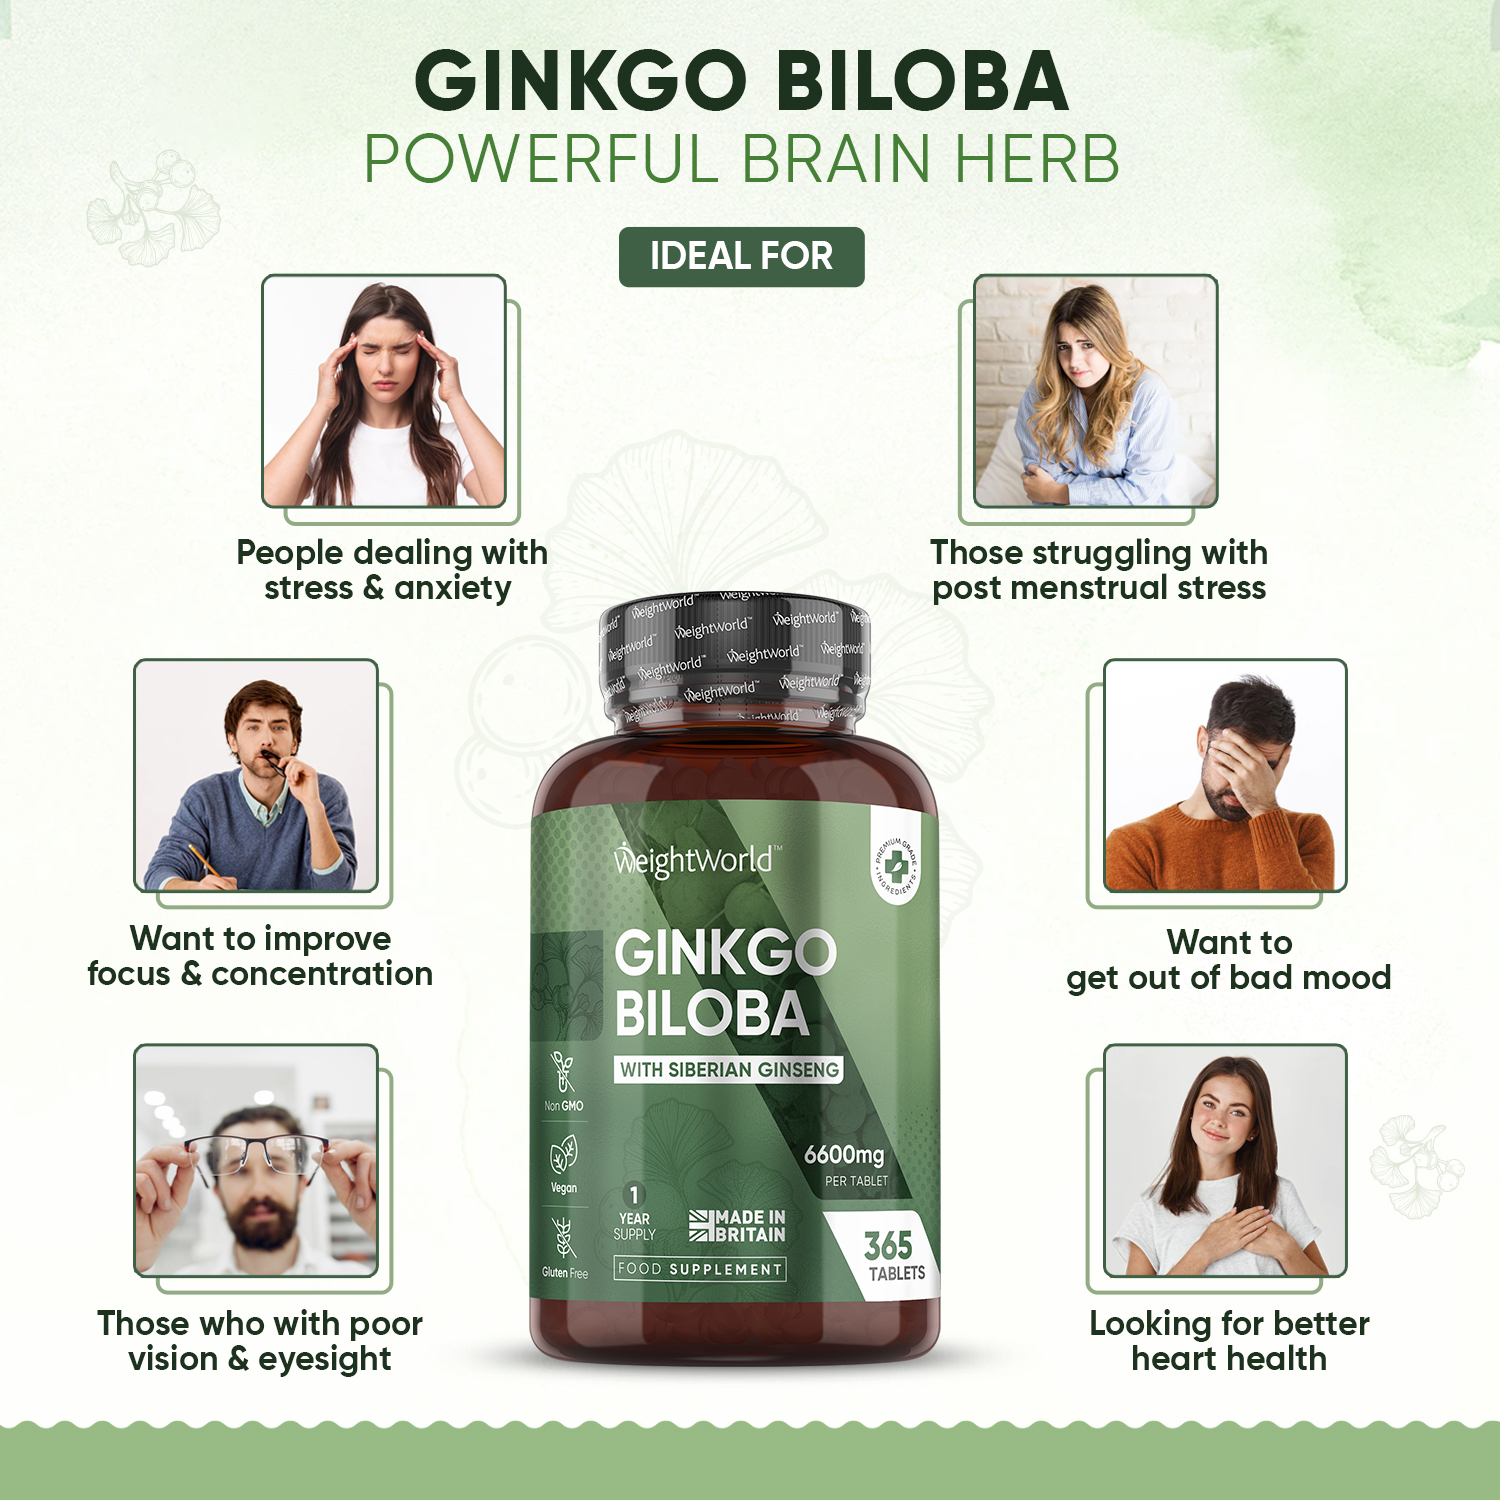 Ginkgo Biloba With Siberian Ginseng from EarthBiotics - Health Benefits